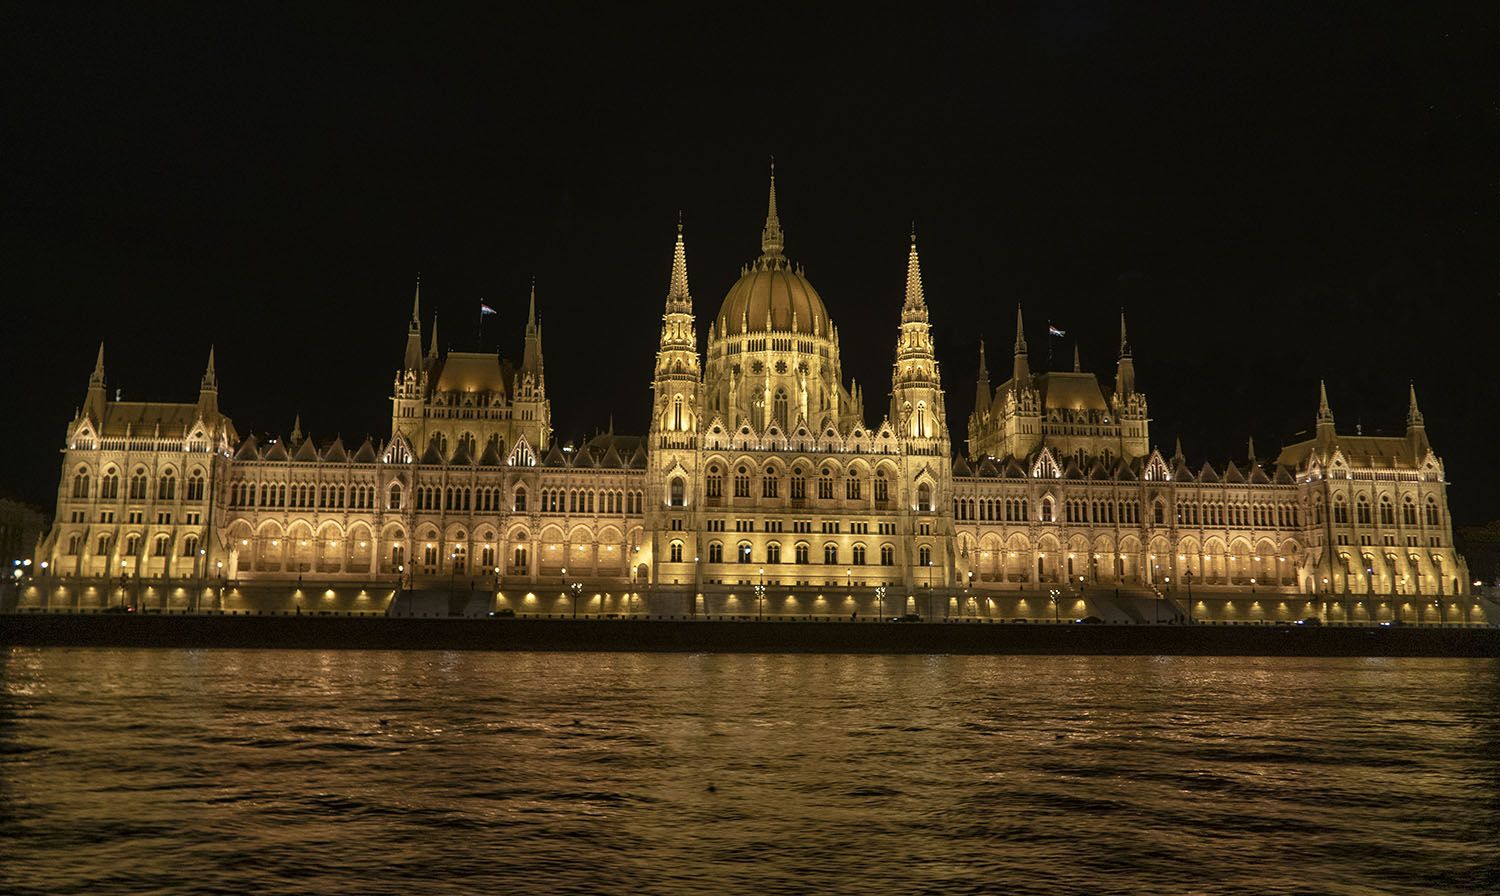 Qué ver en Budapest: Vistas desde el crucero - actividades y tours en Budapest - Free tours por Budapest